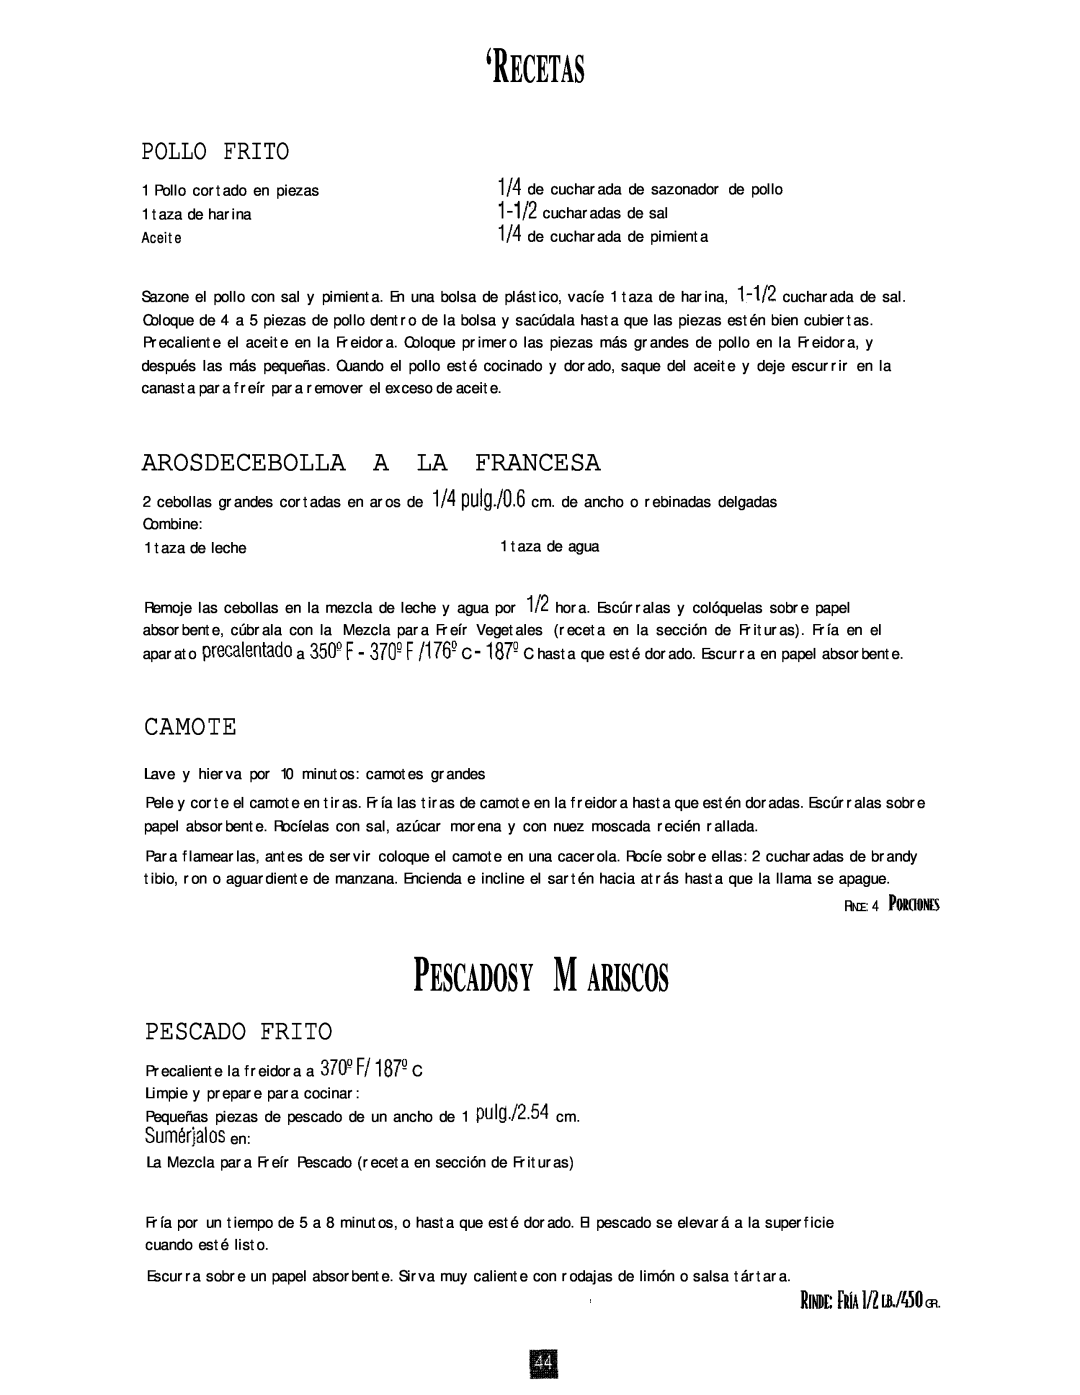 Oster 3246 manual ‘Recetas, Pescados Y M Ariscos, Pollo Frito, Arosdecebolla A La Francesa, Camote, Pescado Frito 